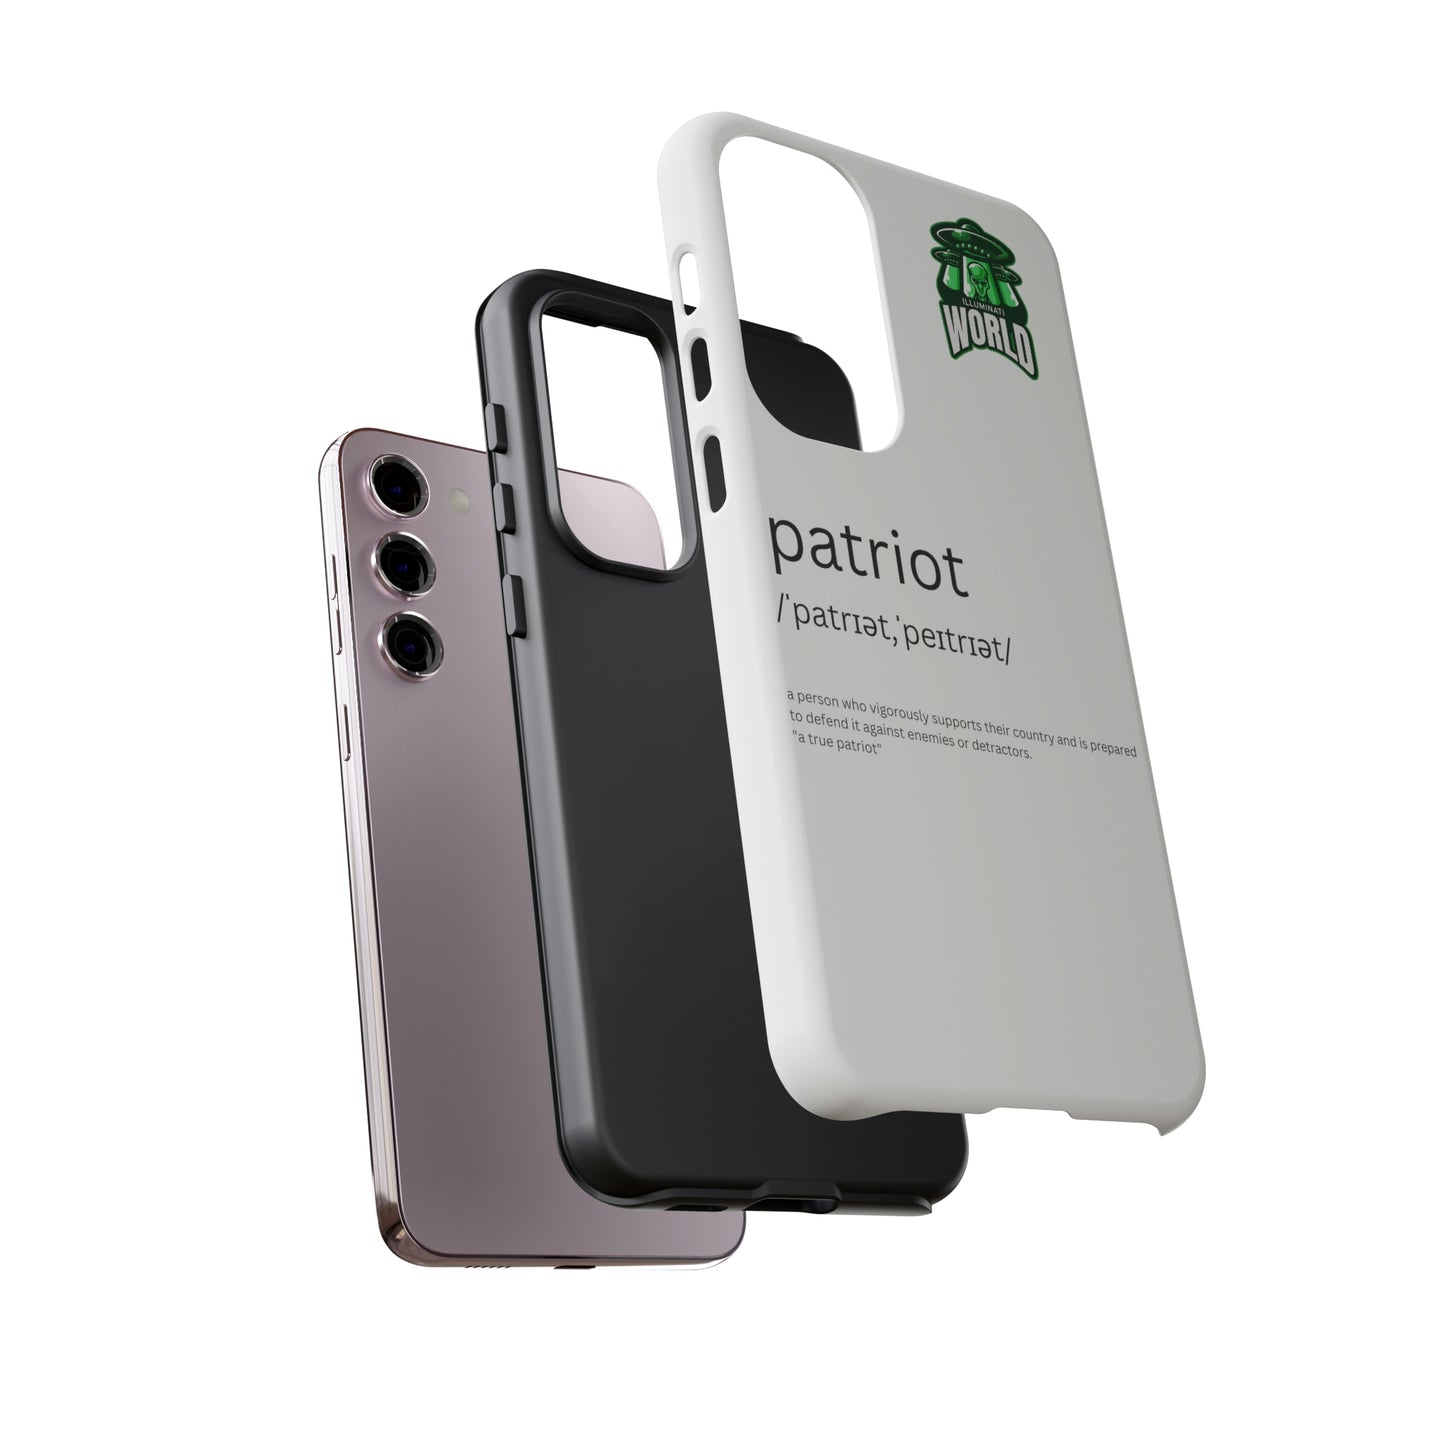 'Patriot' Mobile Phone Tough Cases